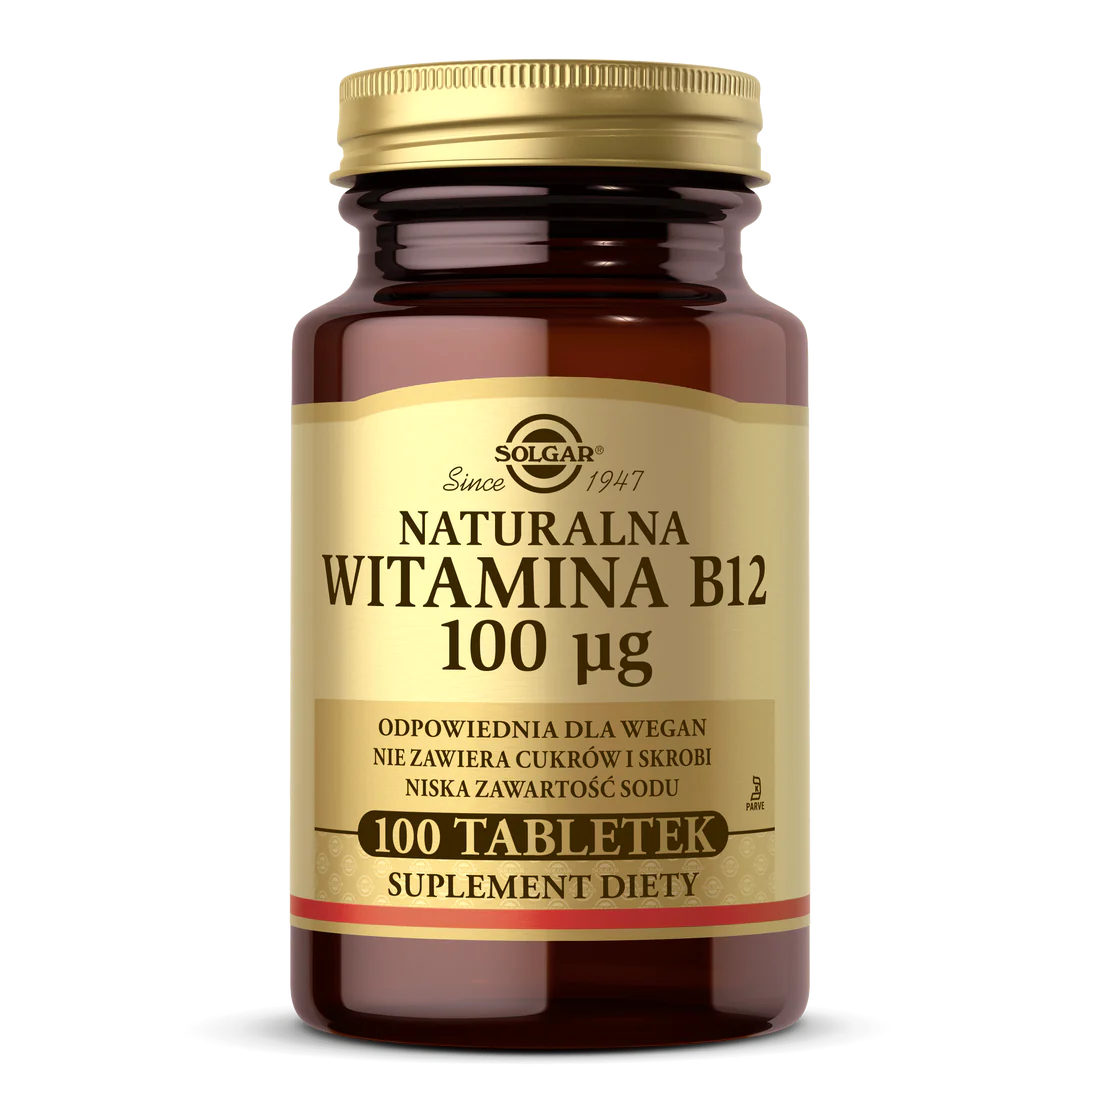 SOLGAR natural vitamin B12